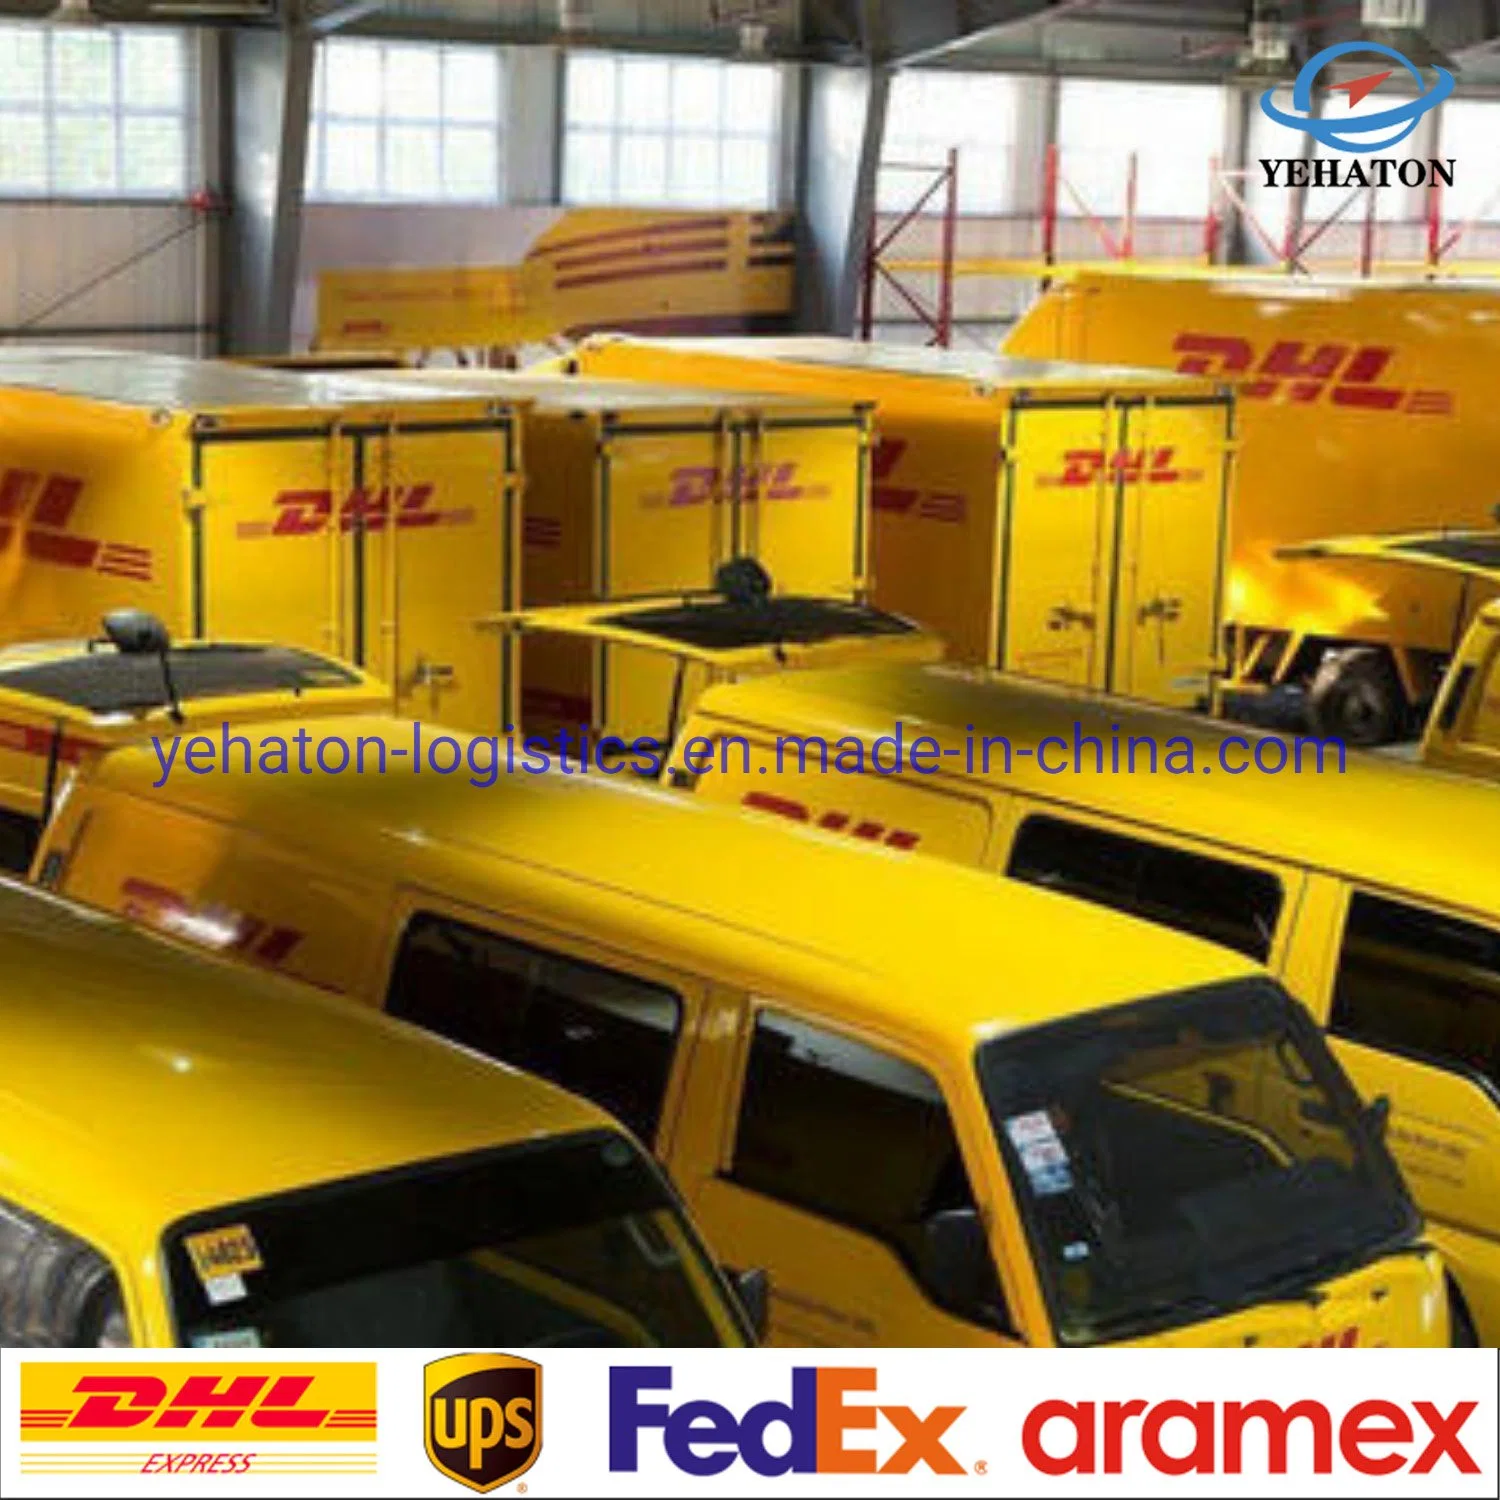 Asequible y de alta calidad Empresa de transporte logística internacional, seguro y rápido Air Freight Forwarder, de China a México, Brasil, España, Irlanda,